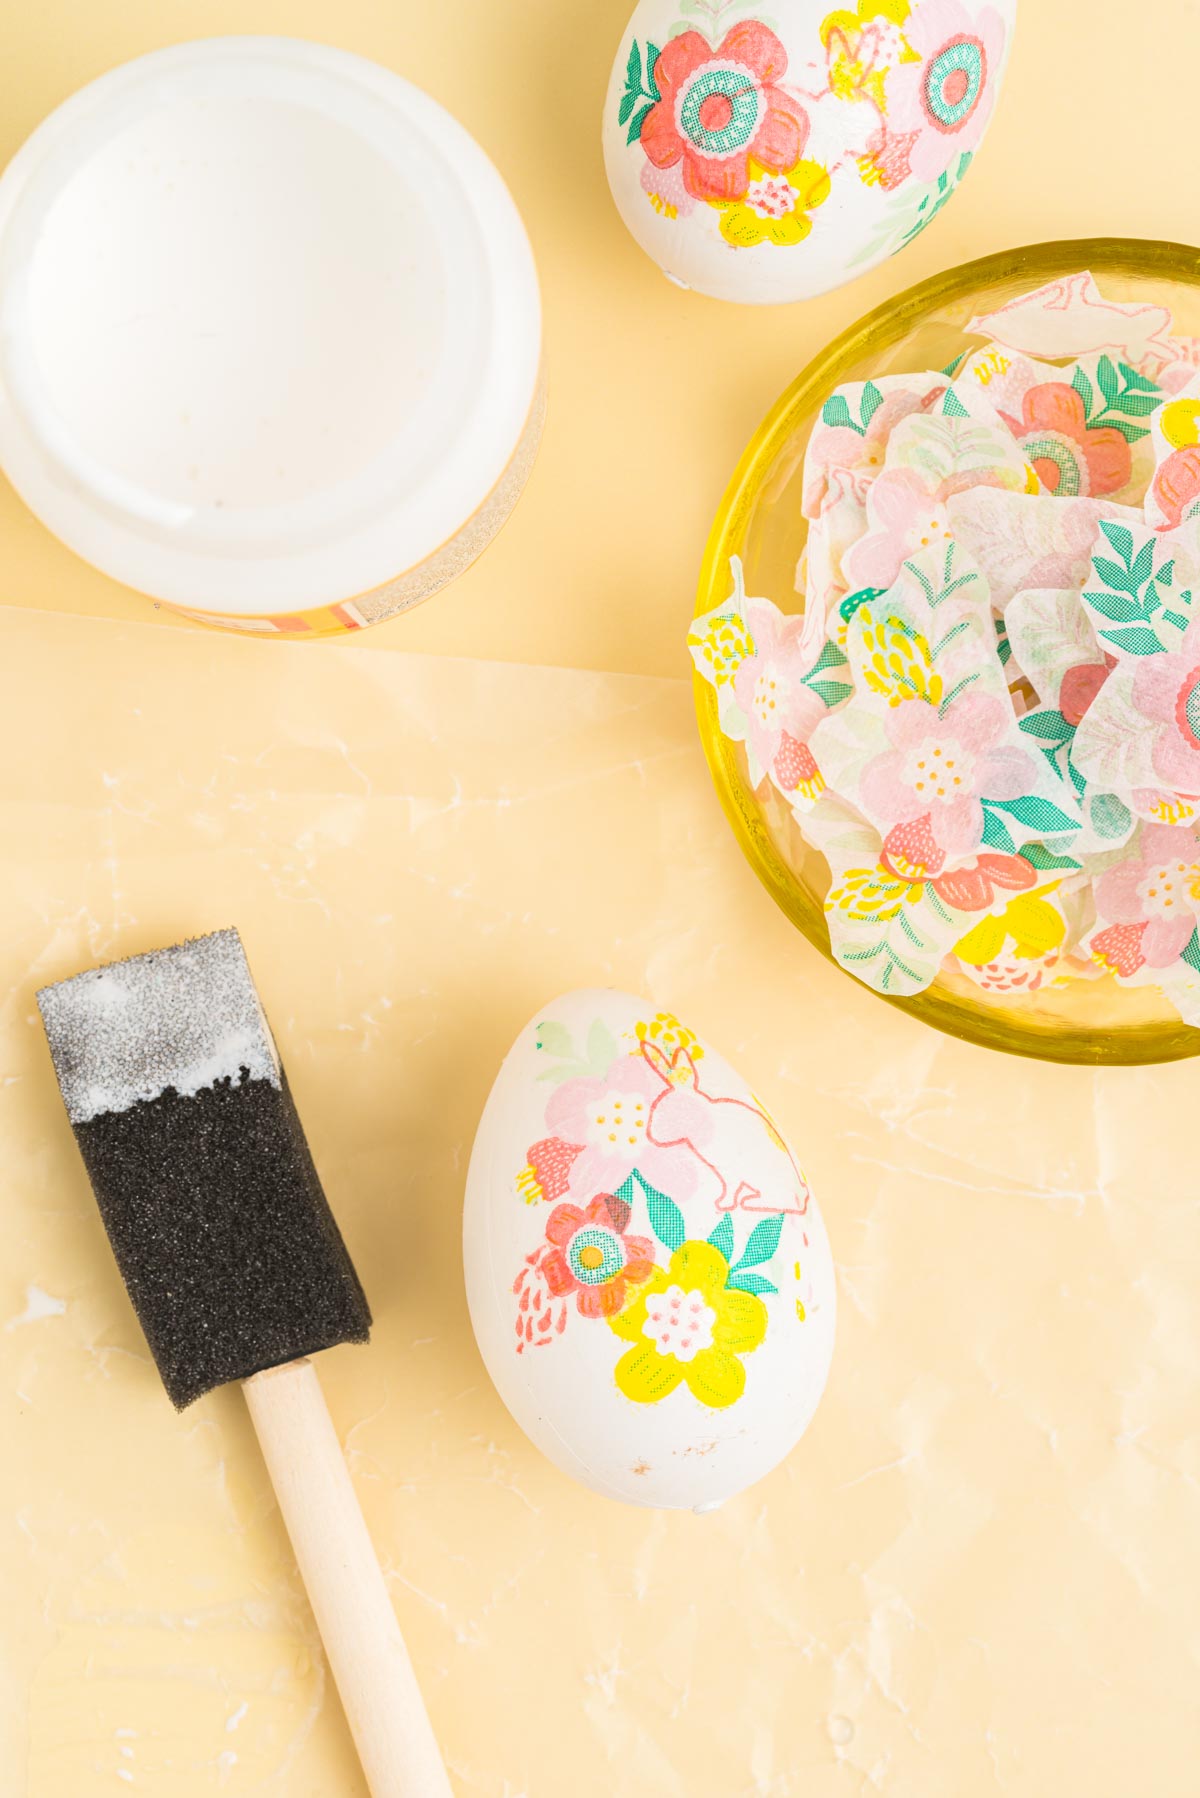 foam paint brush and a decoupage napkin egg